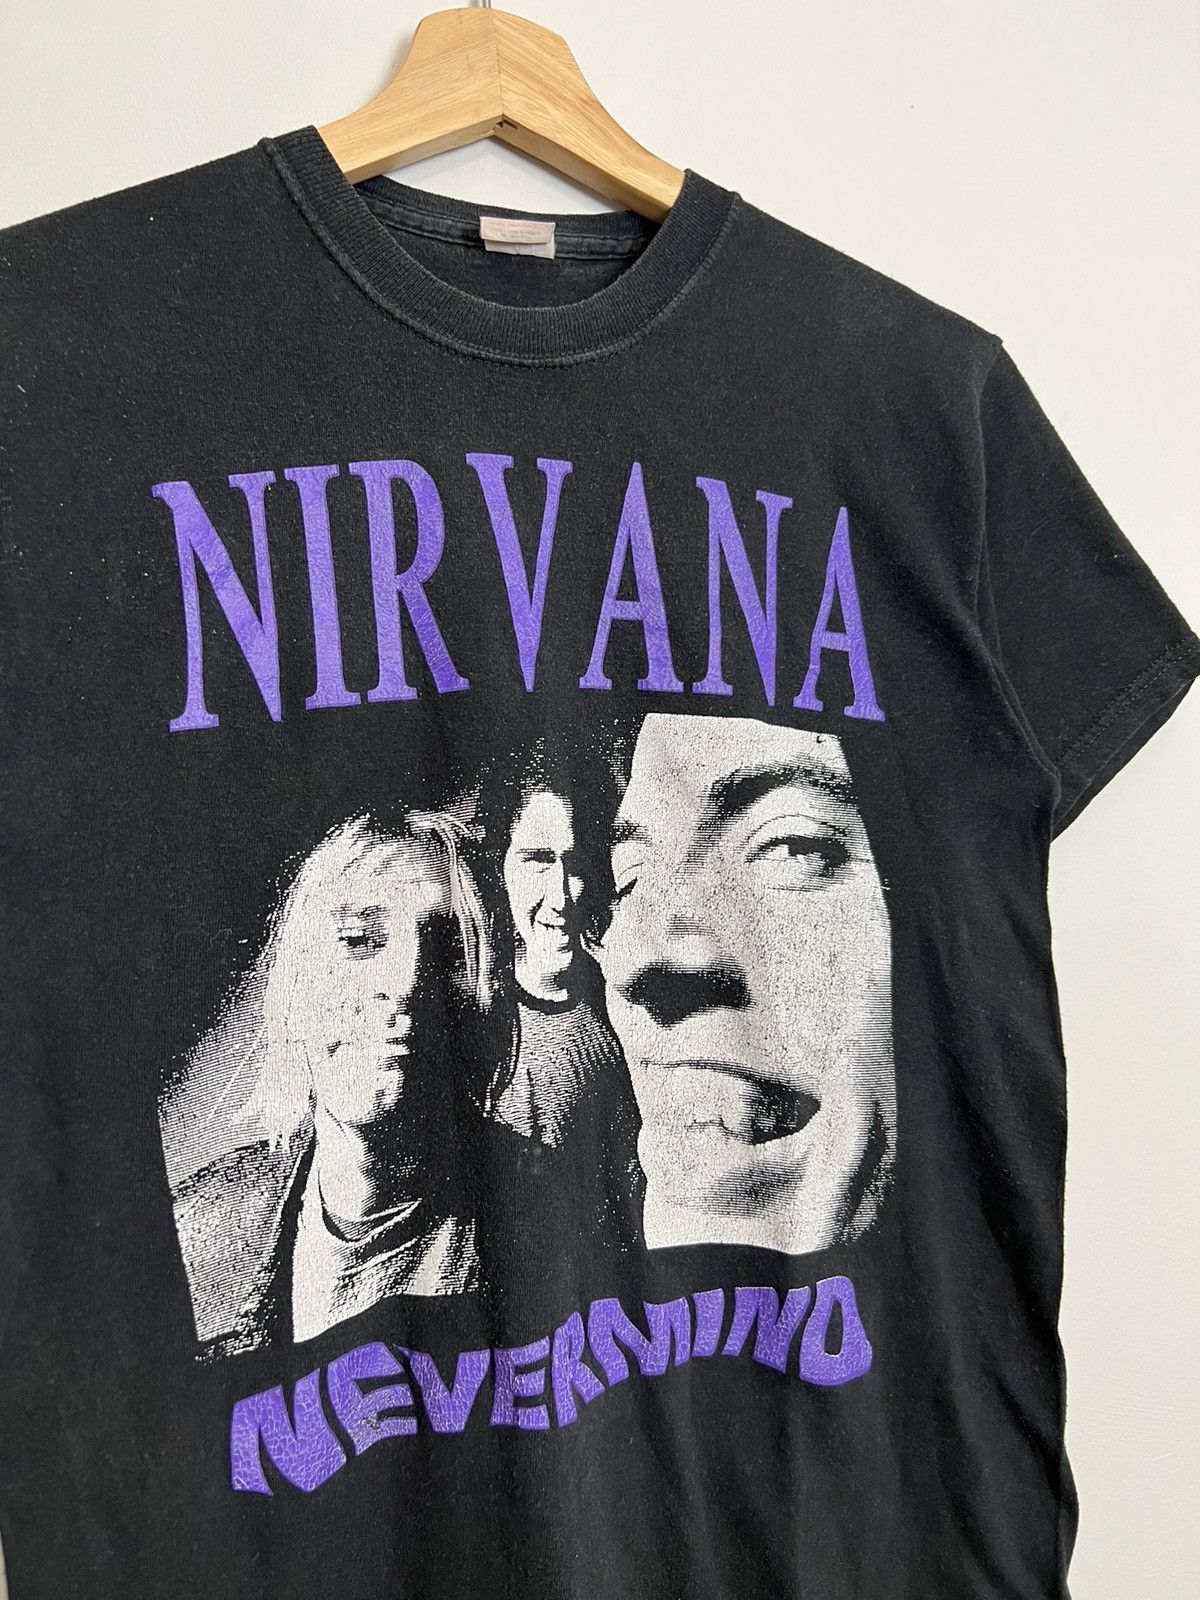 Vintage 90's Nirvana Nevermind Kurt Cobain Grunge Vintage T Shirt Size US S / EU 44-46 / 1 - 2 Preview